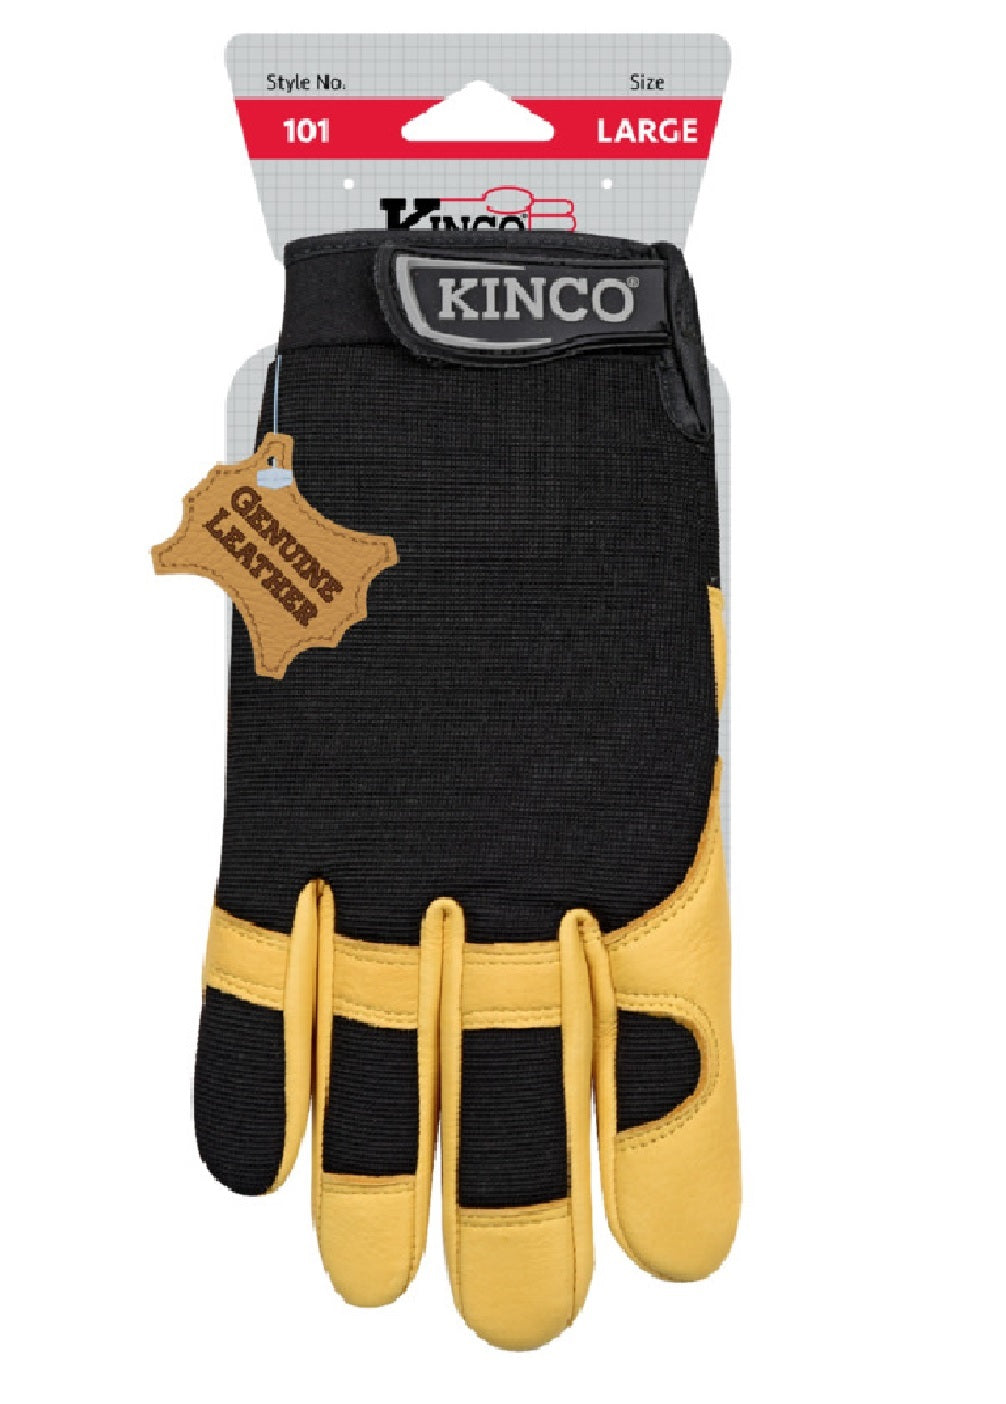 Kinco Deerskin Leather Mechanic Gloves X-Large